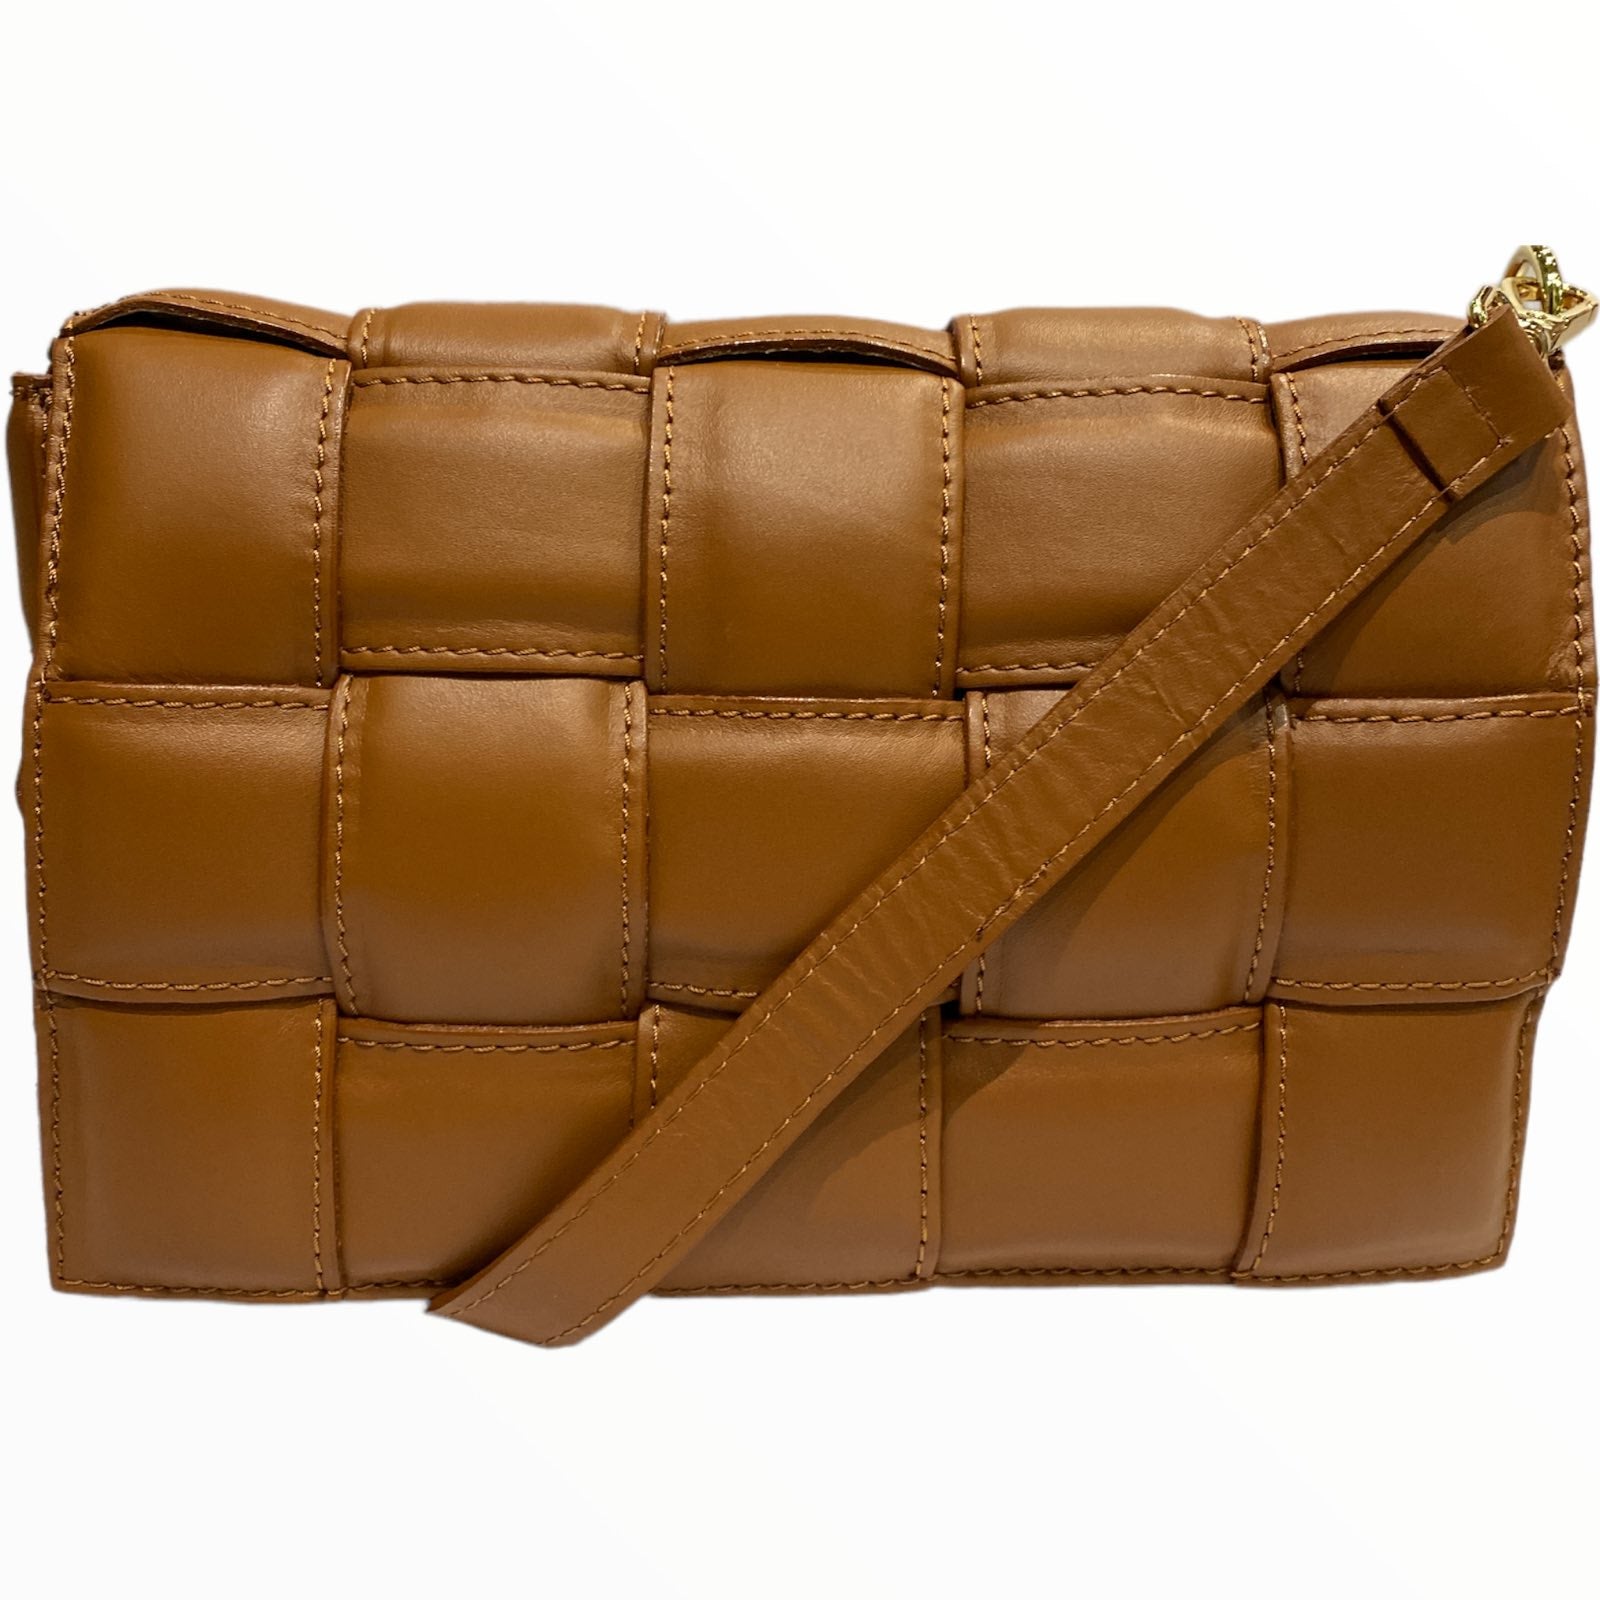 Taba leather woven messenger bag